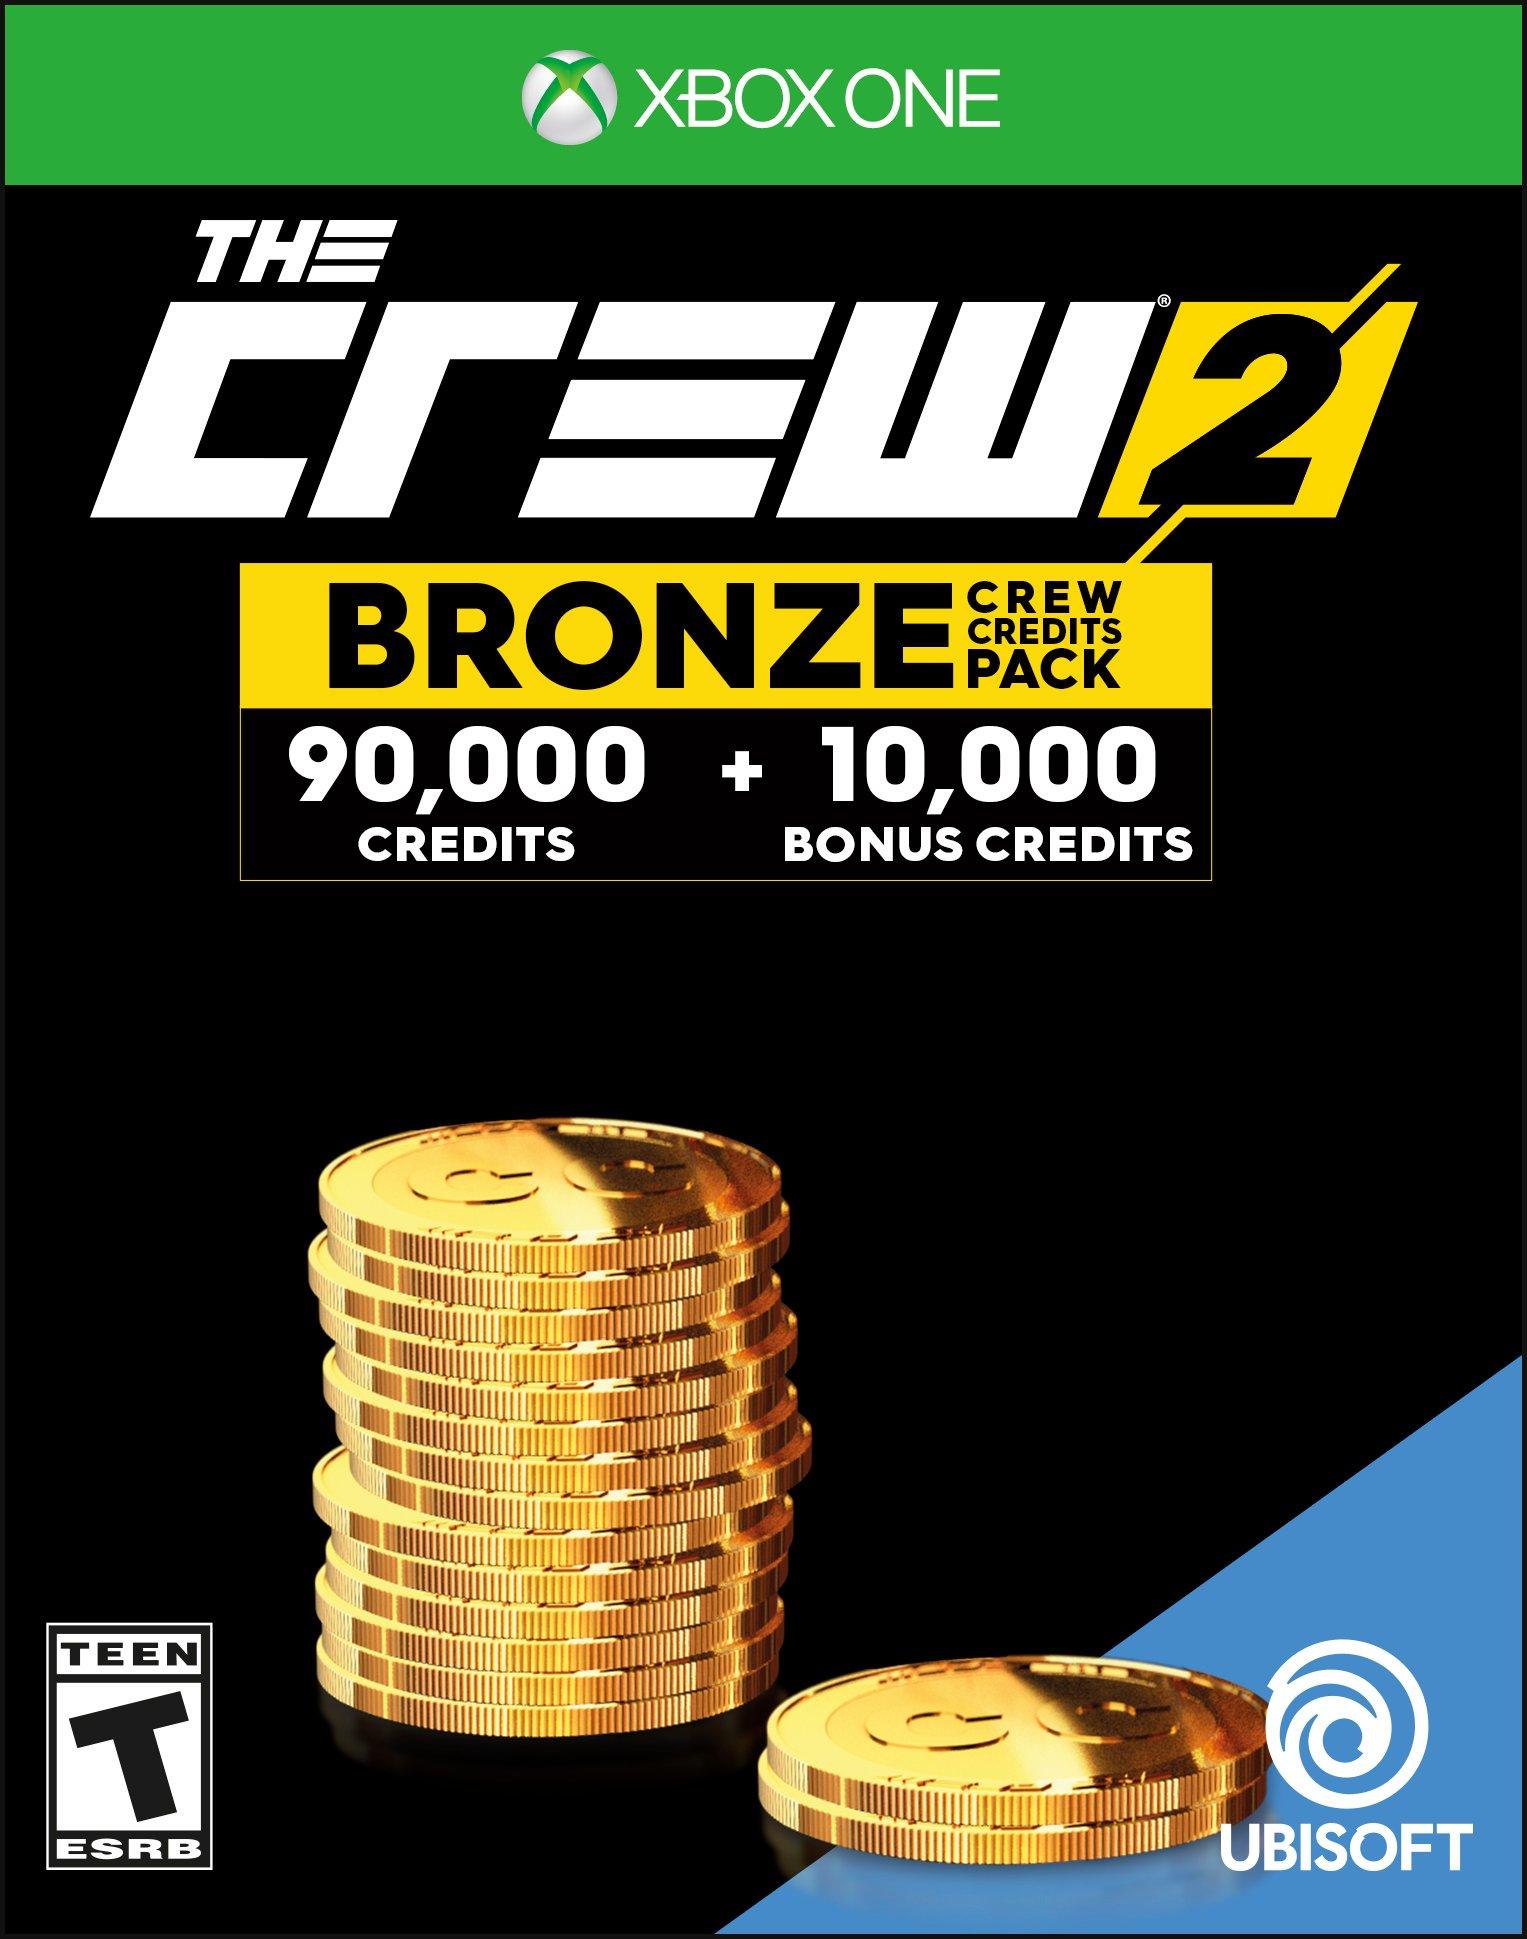 One - Pack One Bronze | GameStop 2 Xbox | The Xbox Credit Crew